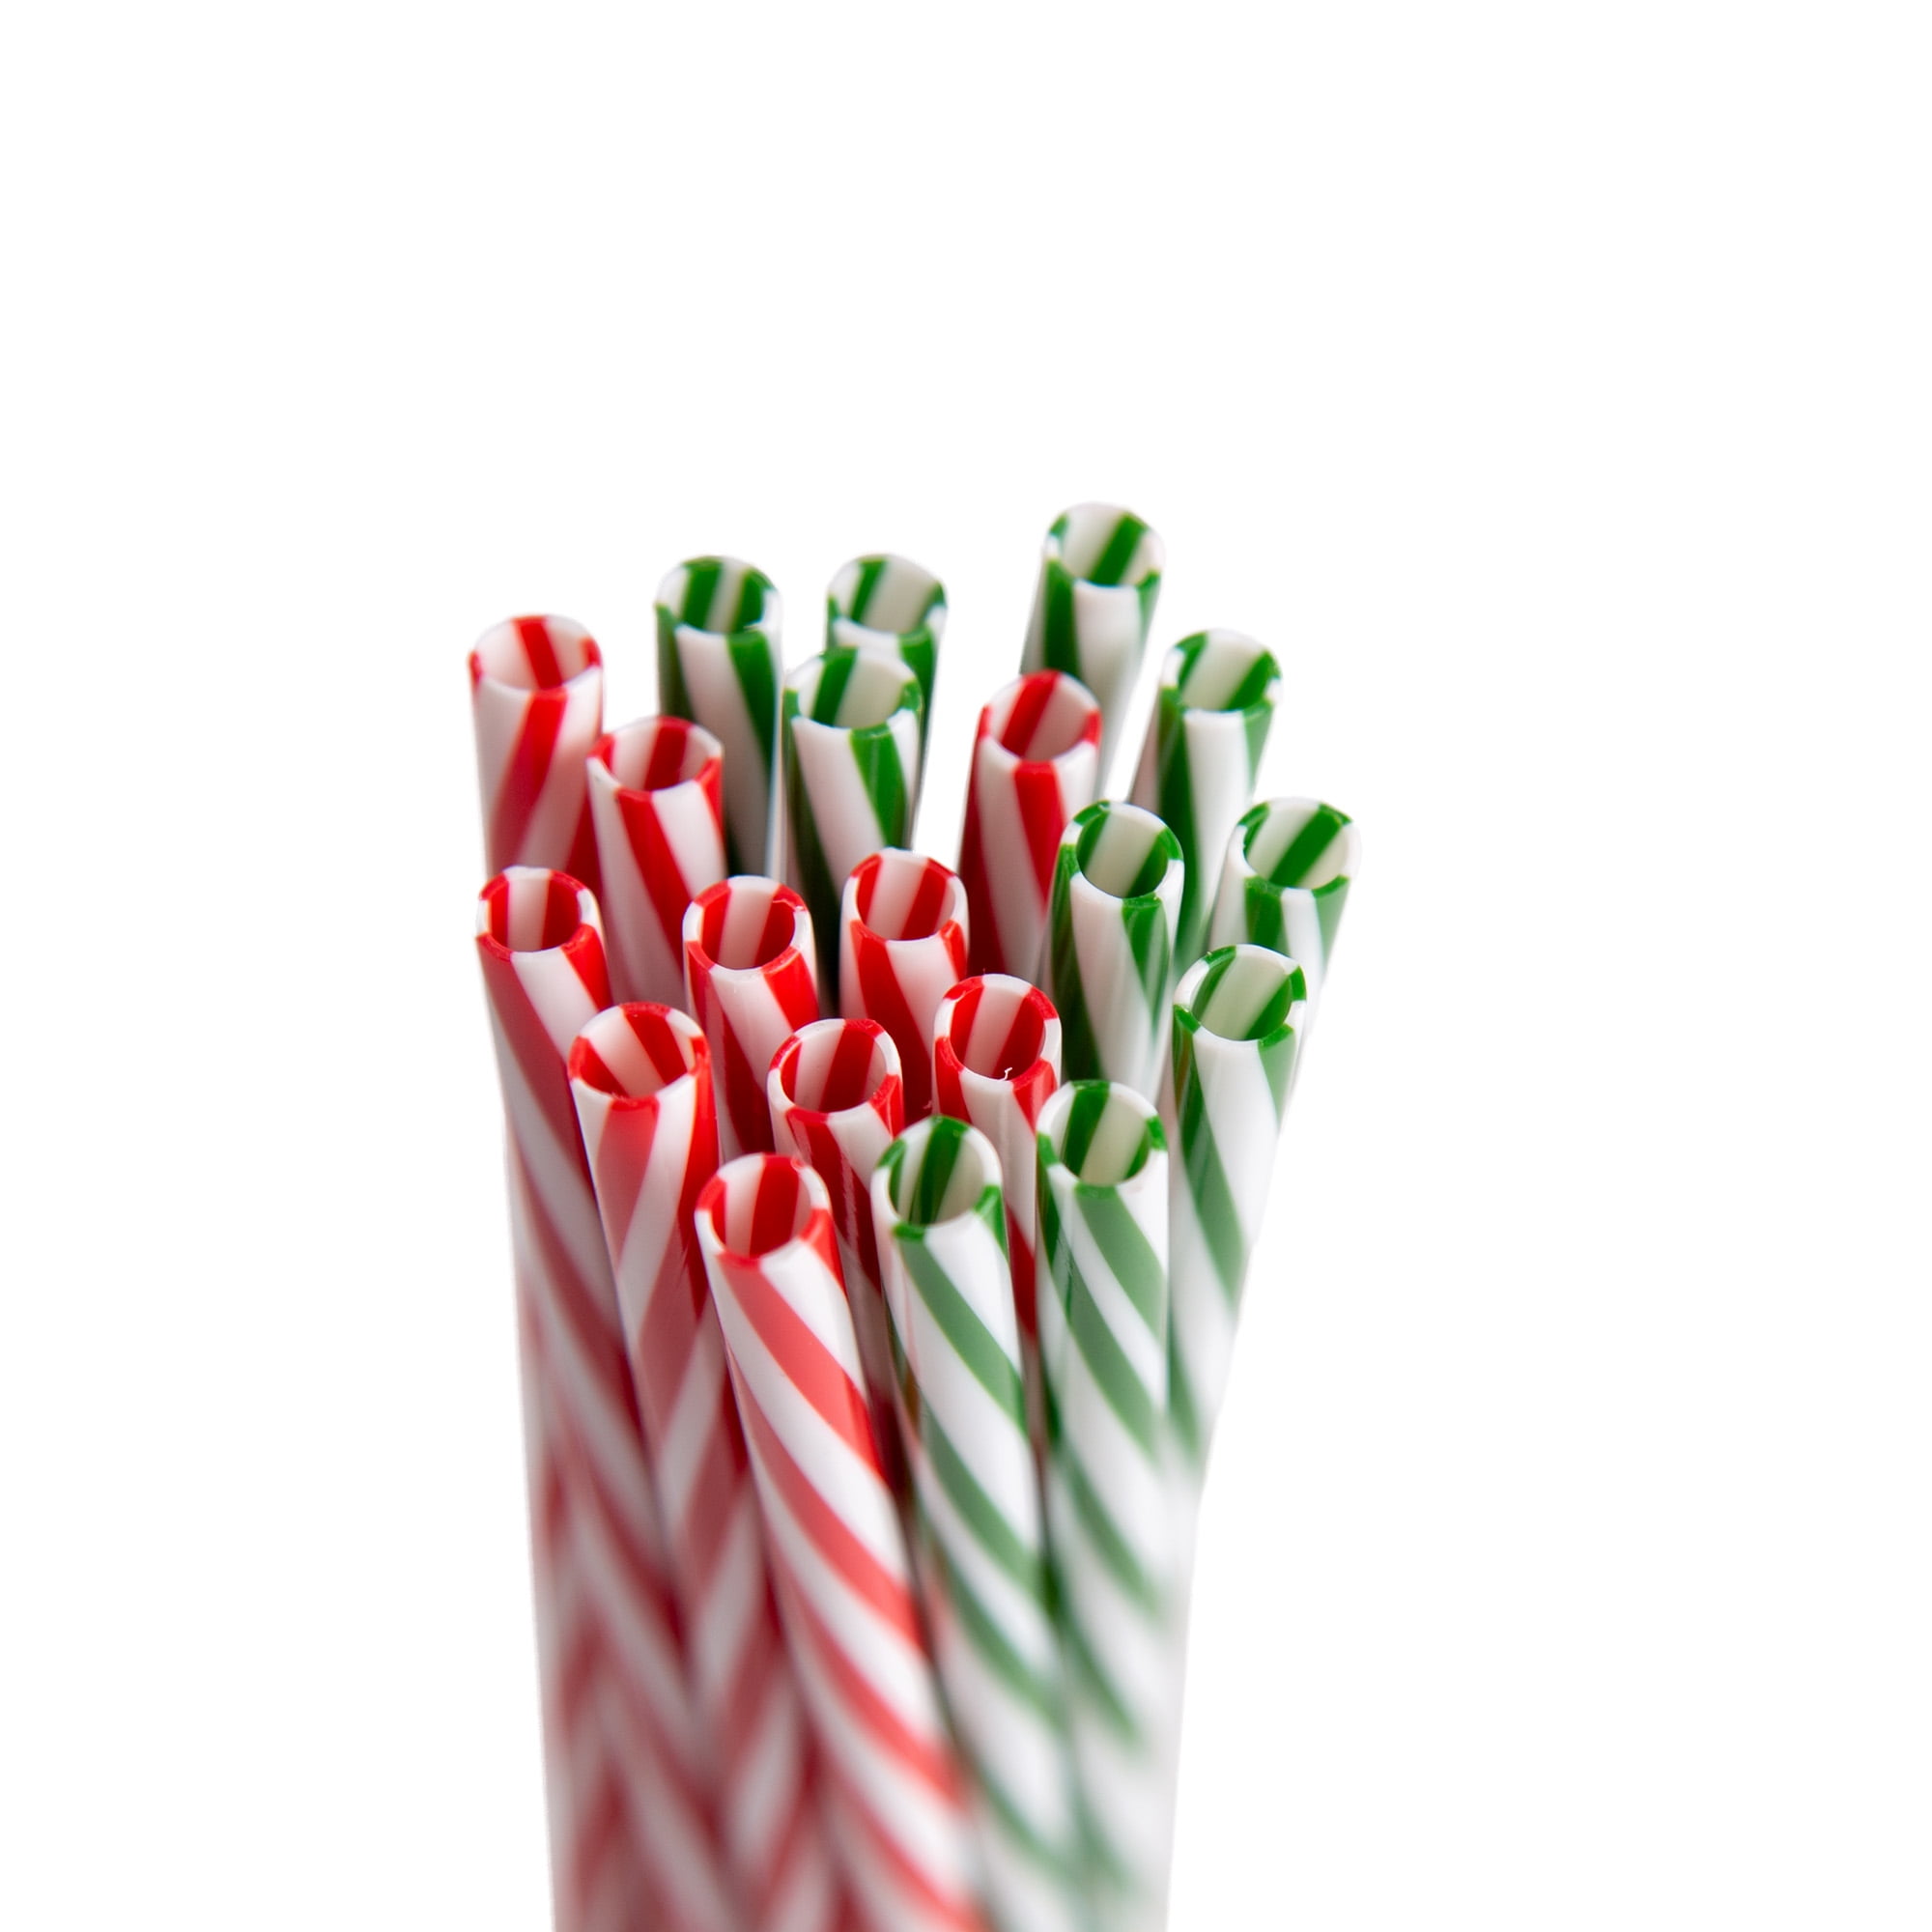 12 Xmas Christmas Metal Drinking Straws Red Green Reusable Eco